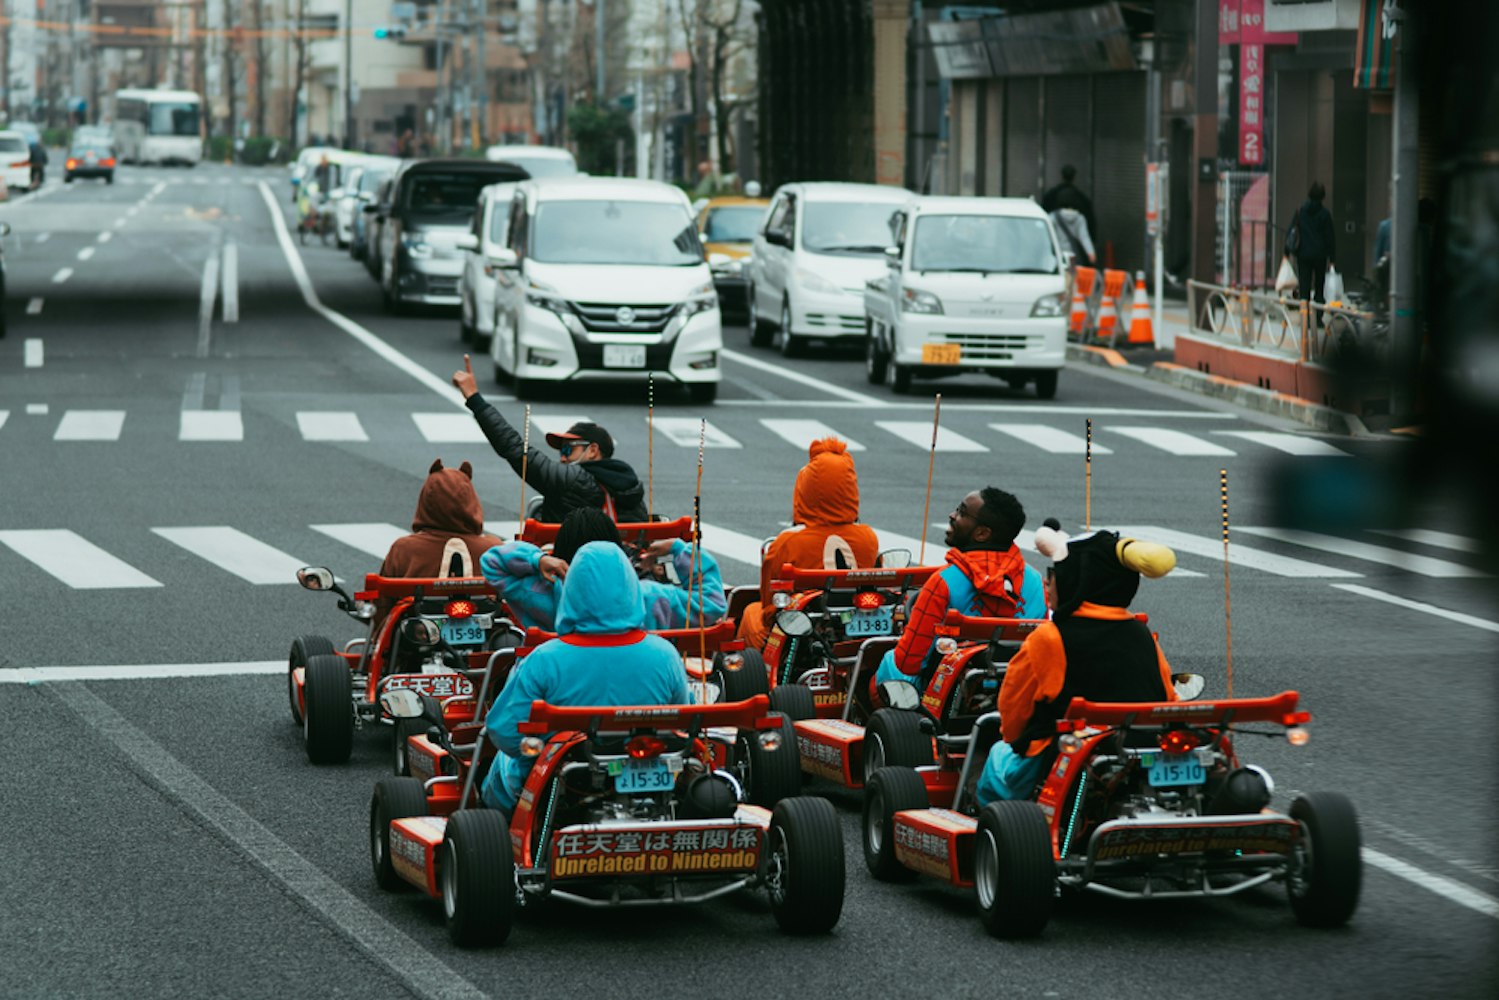 Mario Kart Rider